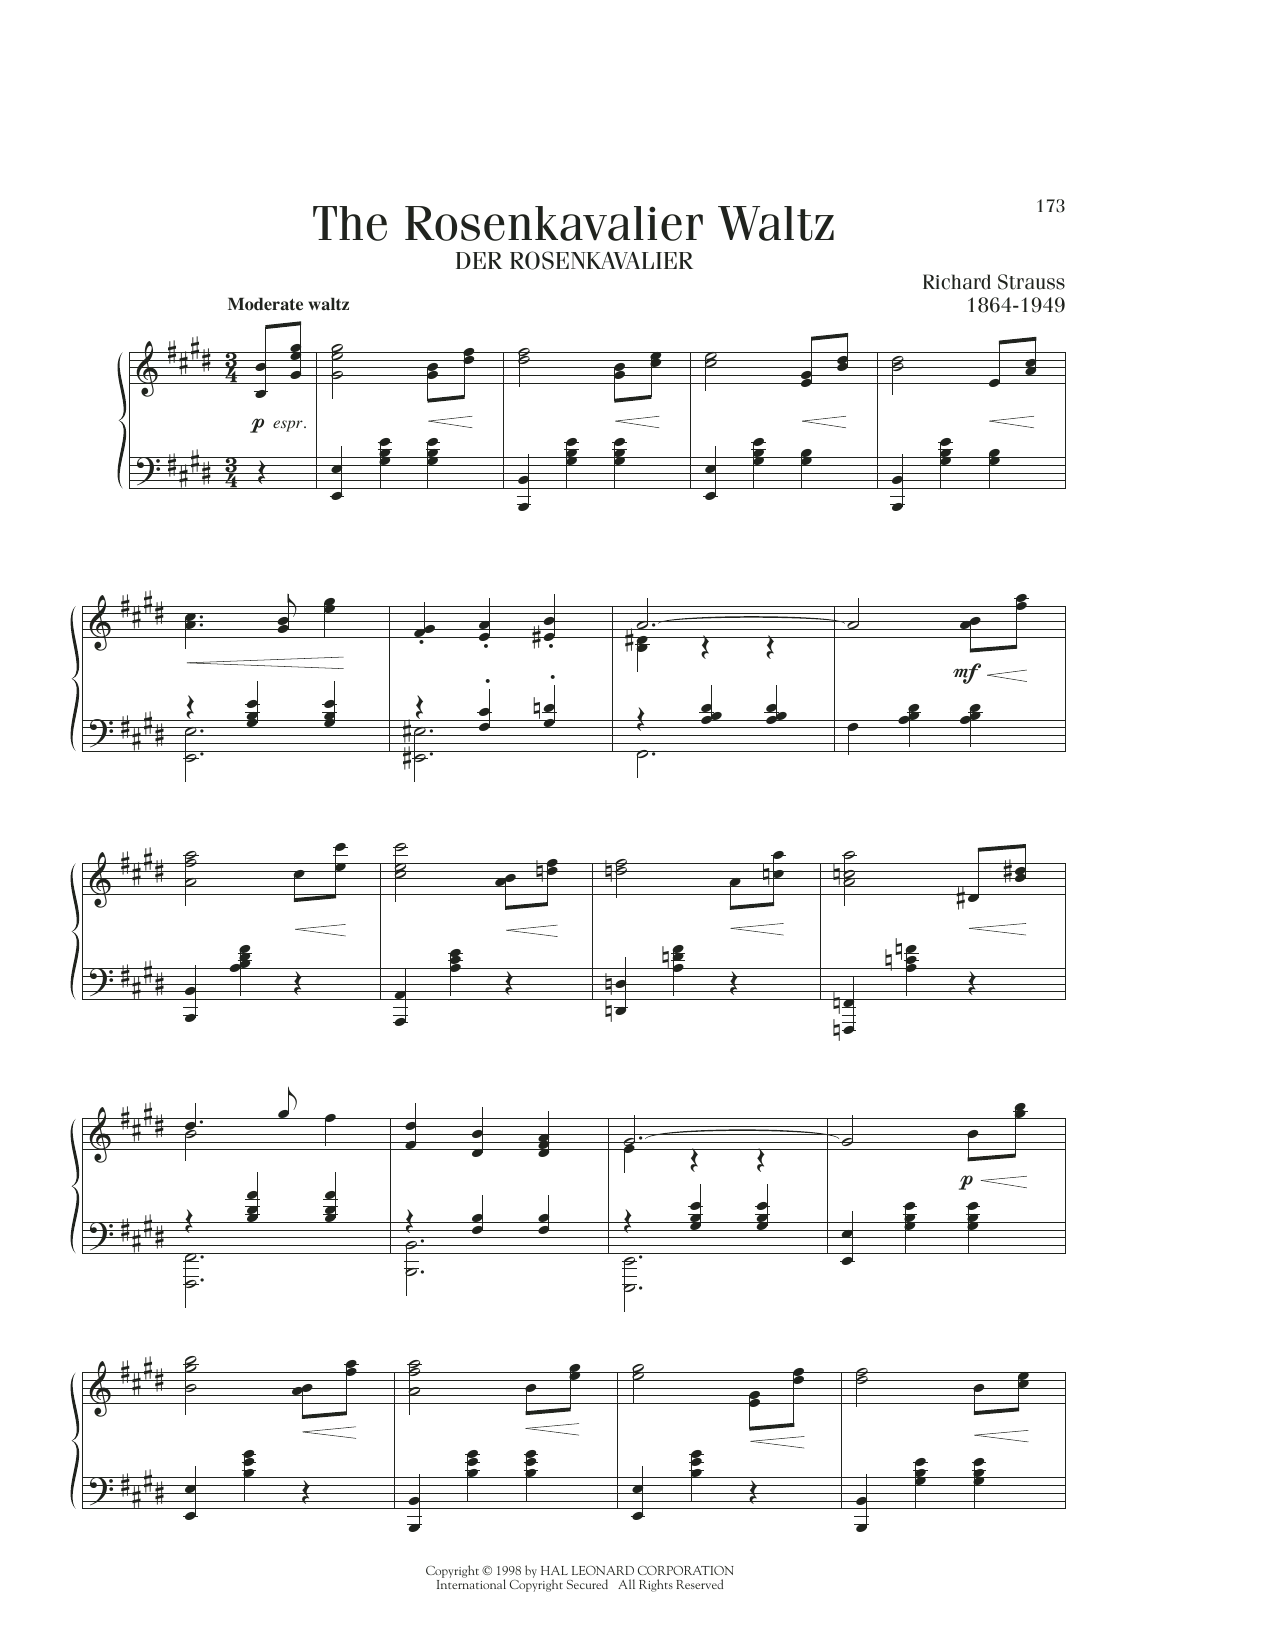 Richard Strauss The Rosenkavalier Waltz sheet music notes printable PDF score